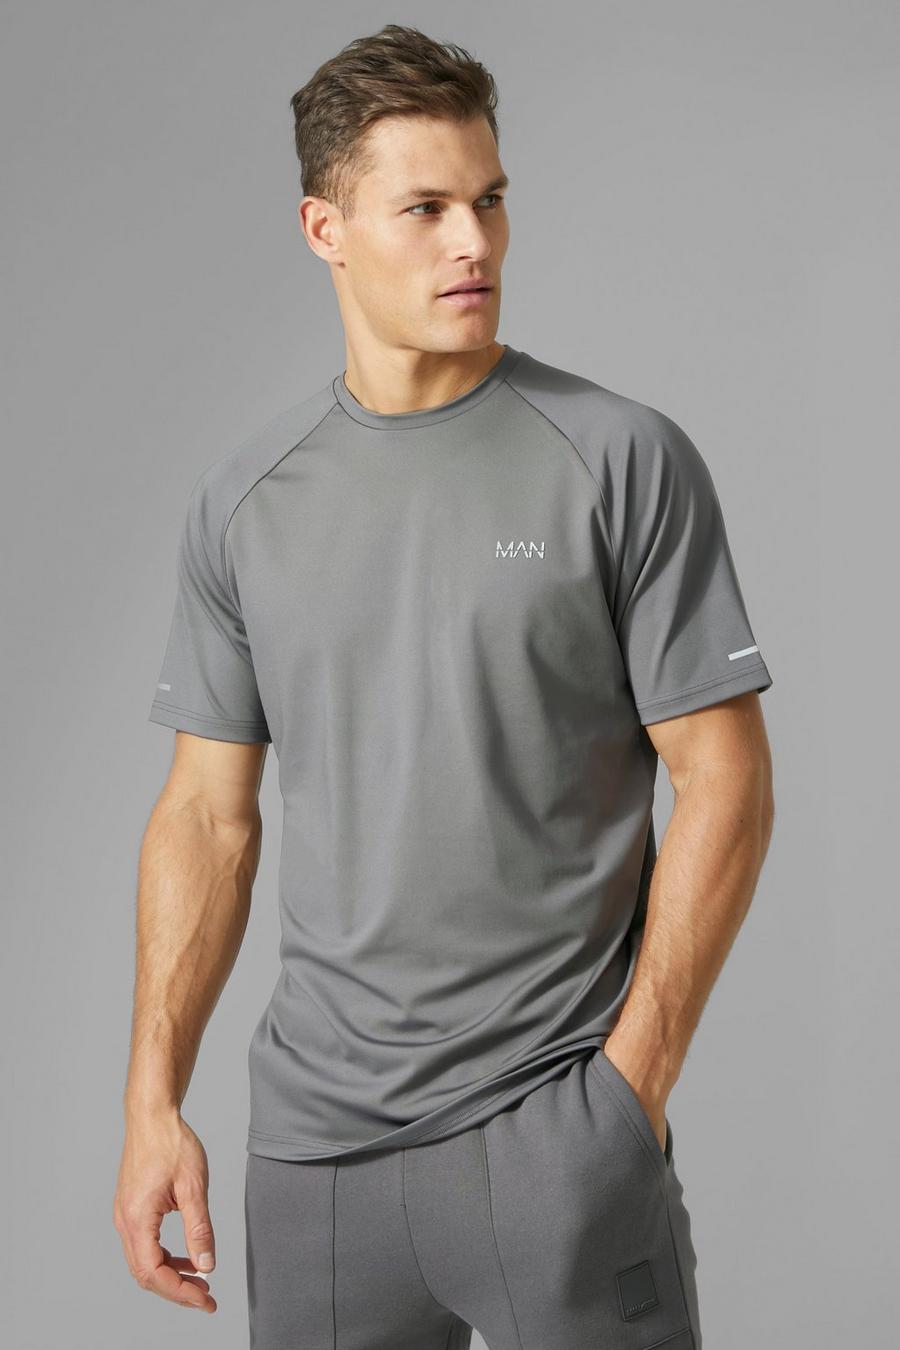 Charcoal grey Tall Man Active Gym Raglan T-shirt